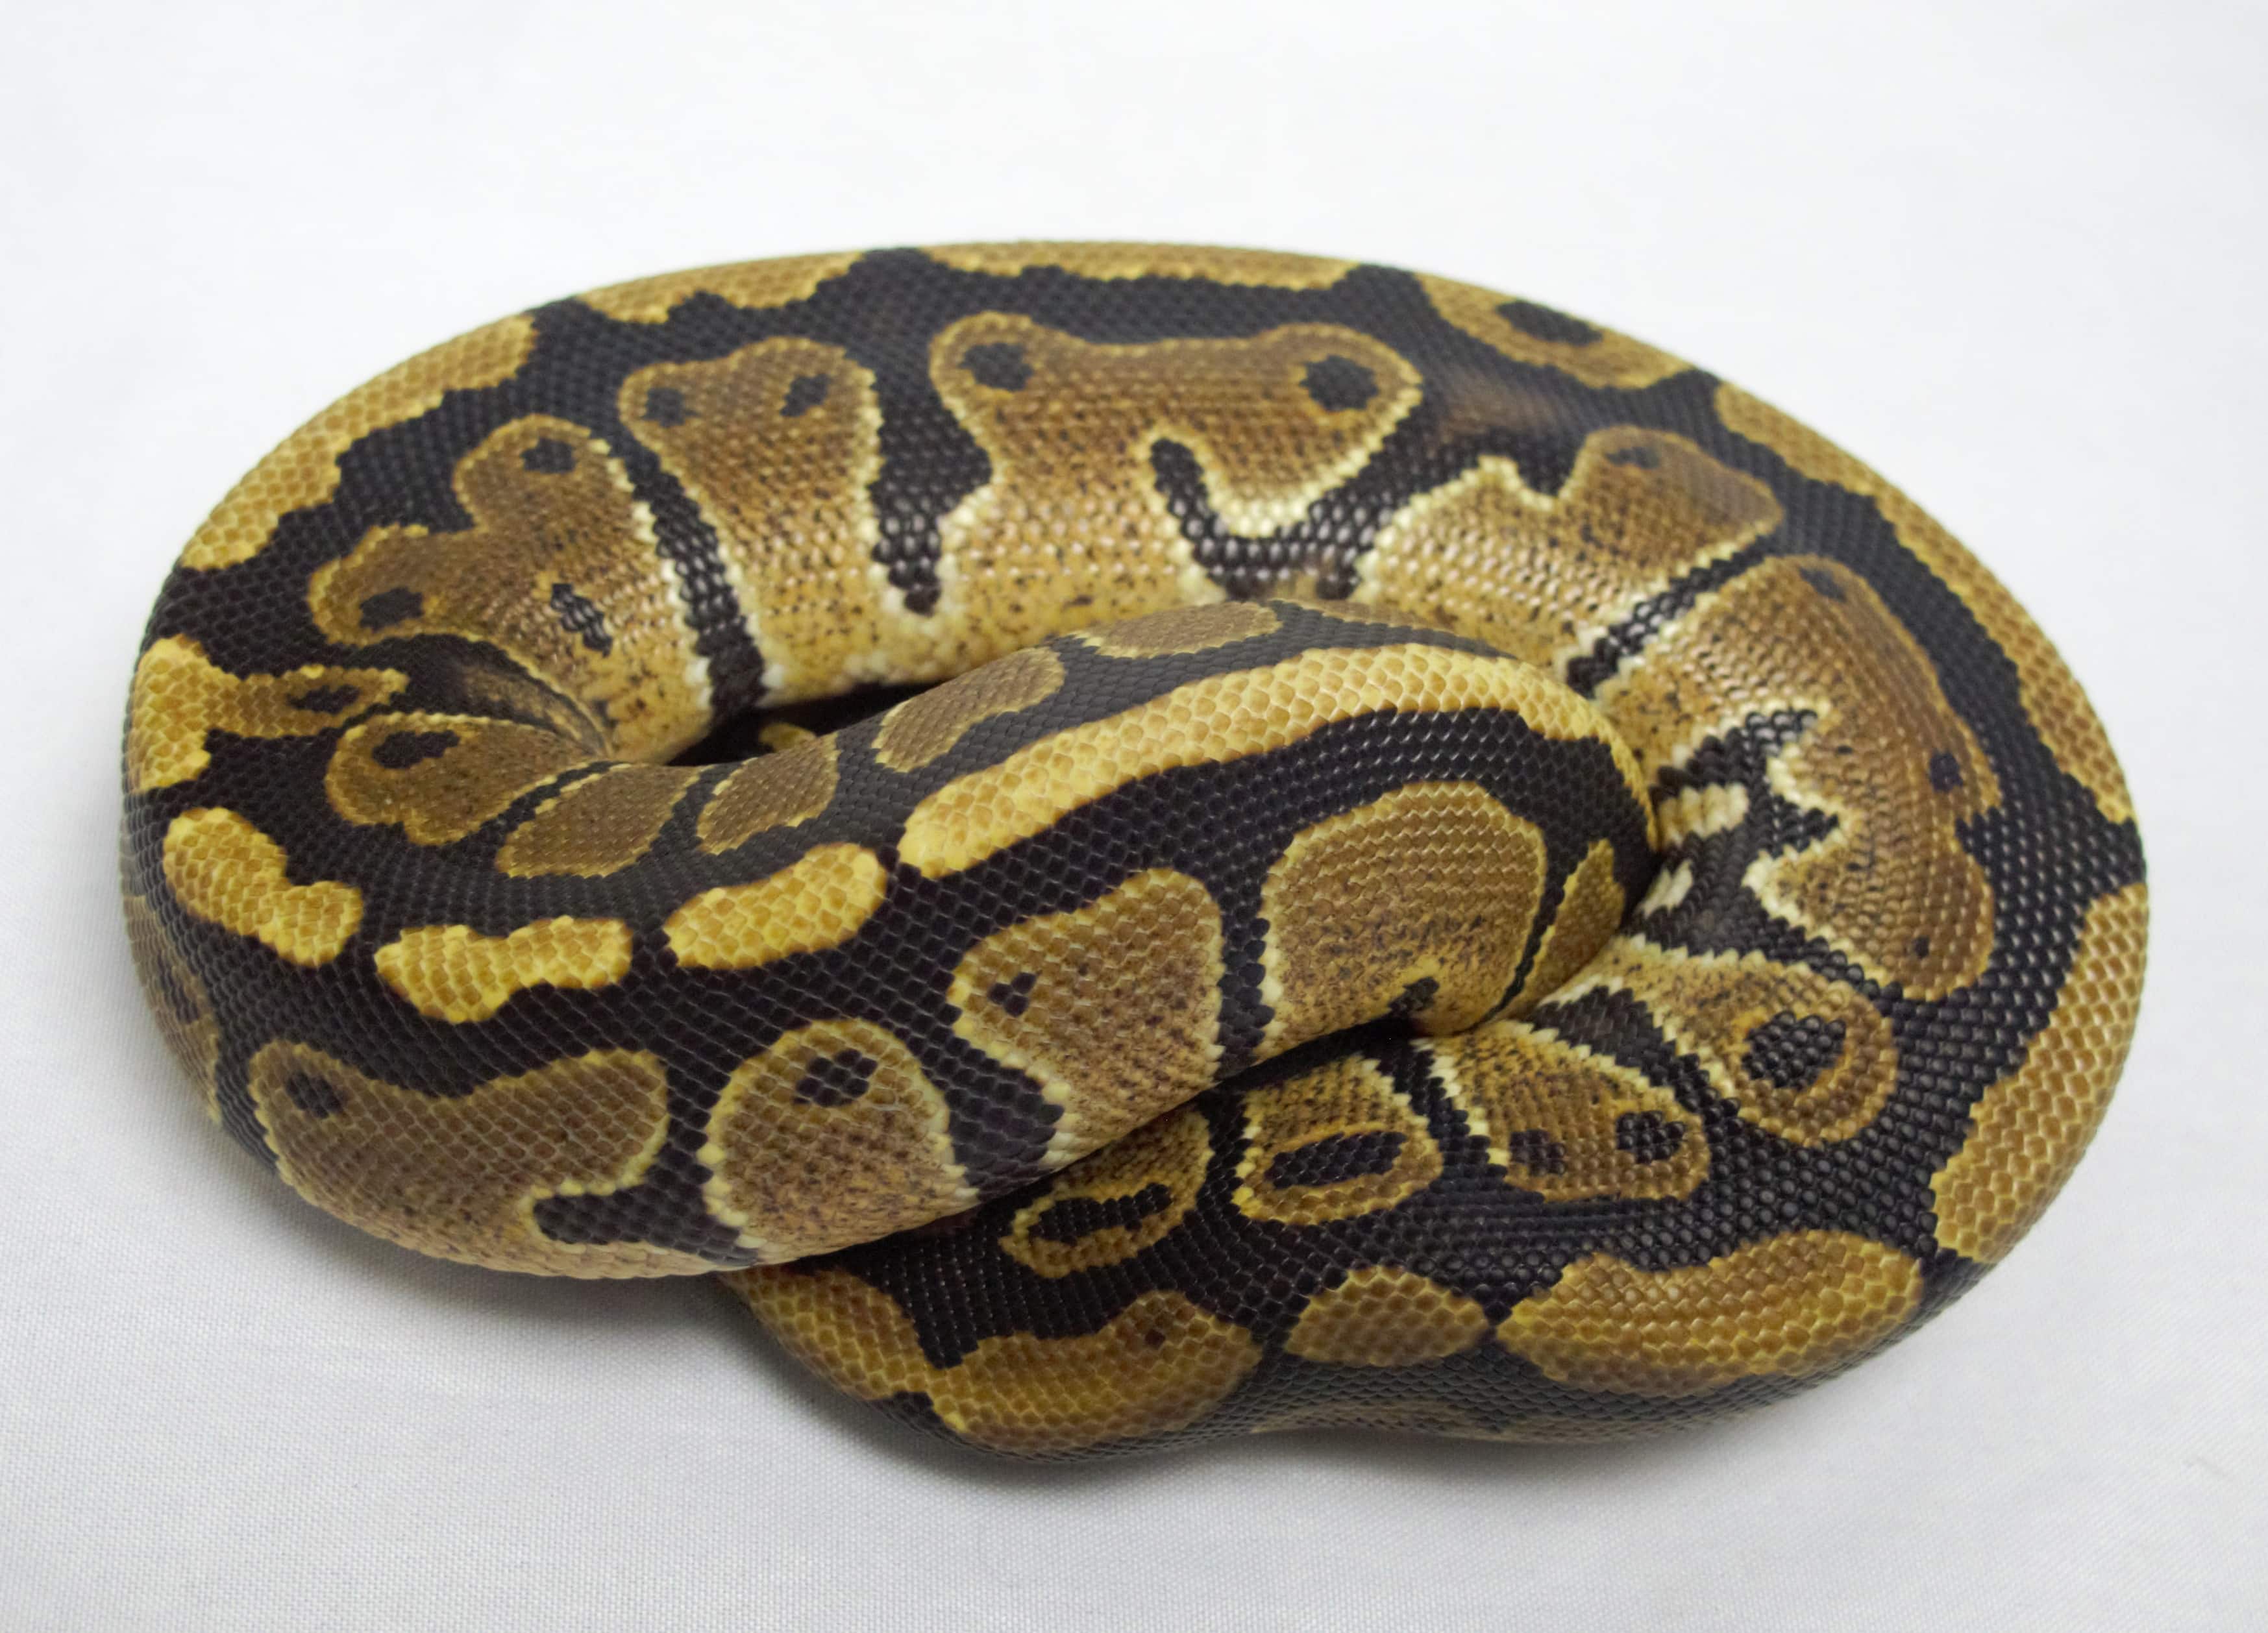 Ball Python, Vanilla Female 2013 - Twin Cities Reptiles.